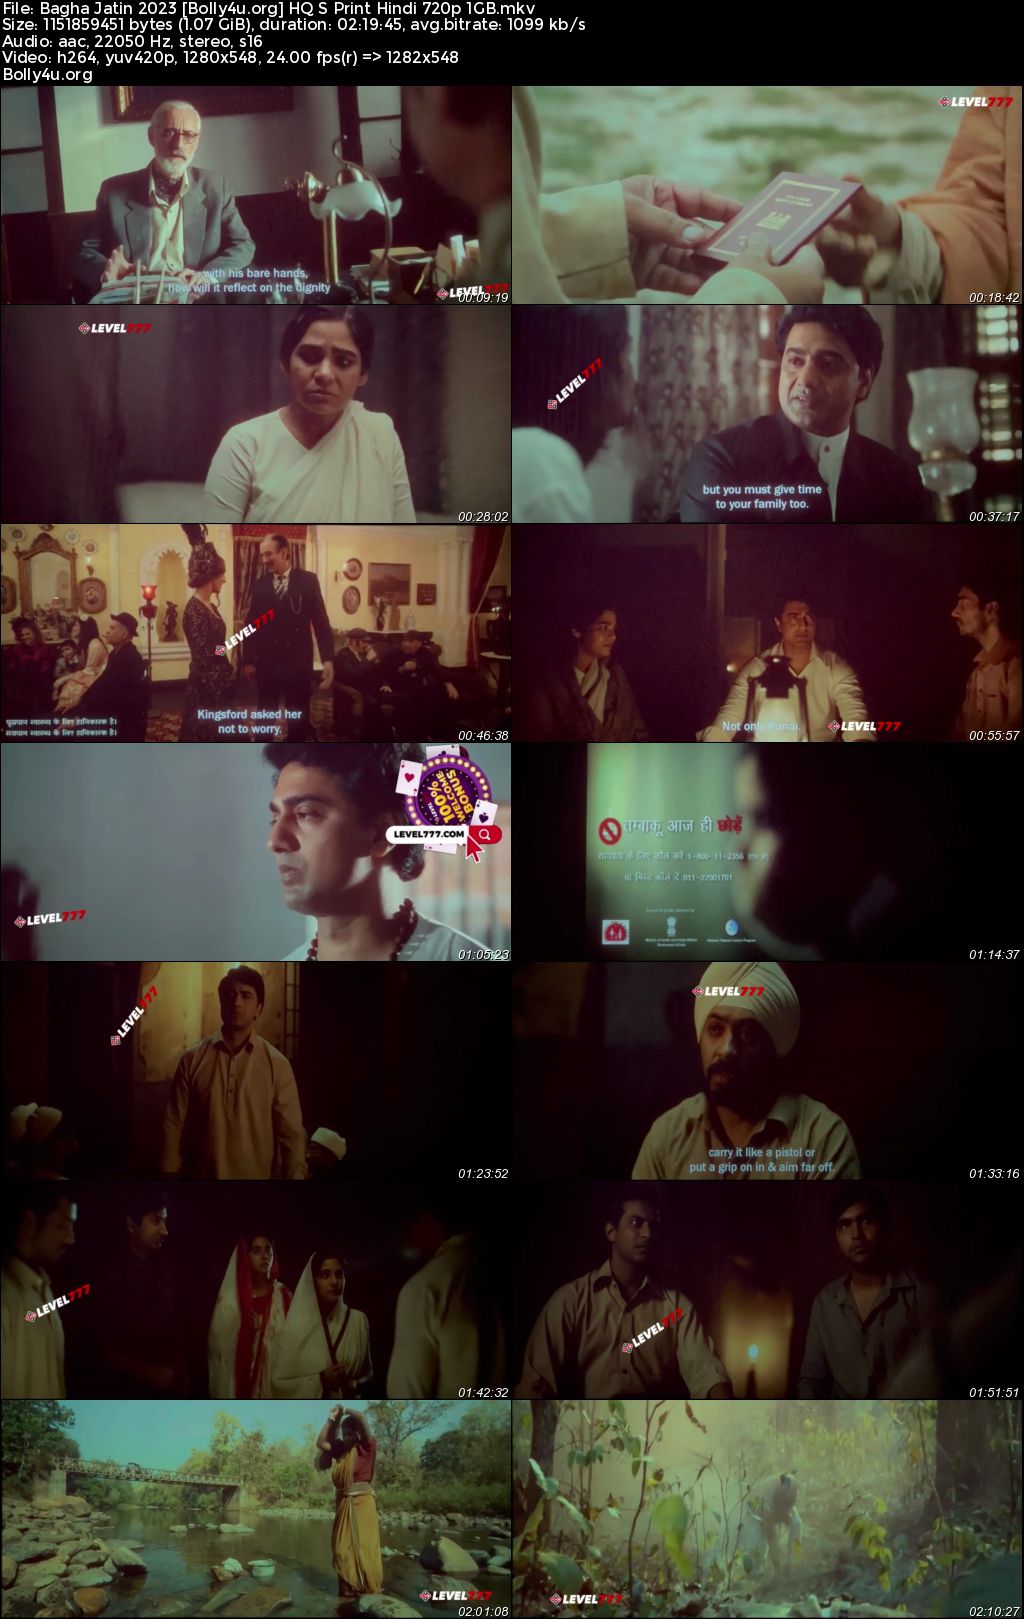 Bagha Jatin 2023 HQ S Print Hindi Full Movie Download 1080p 720p 480p